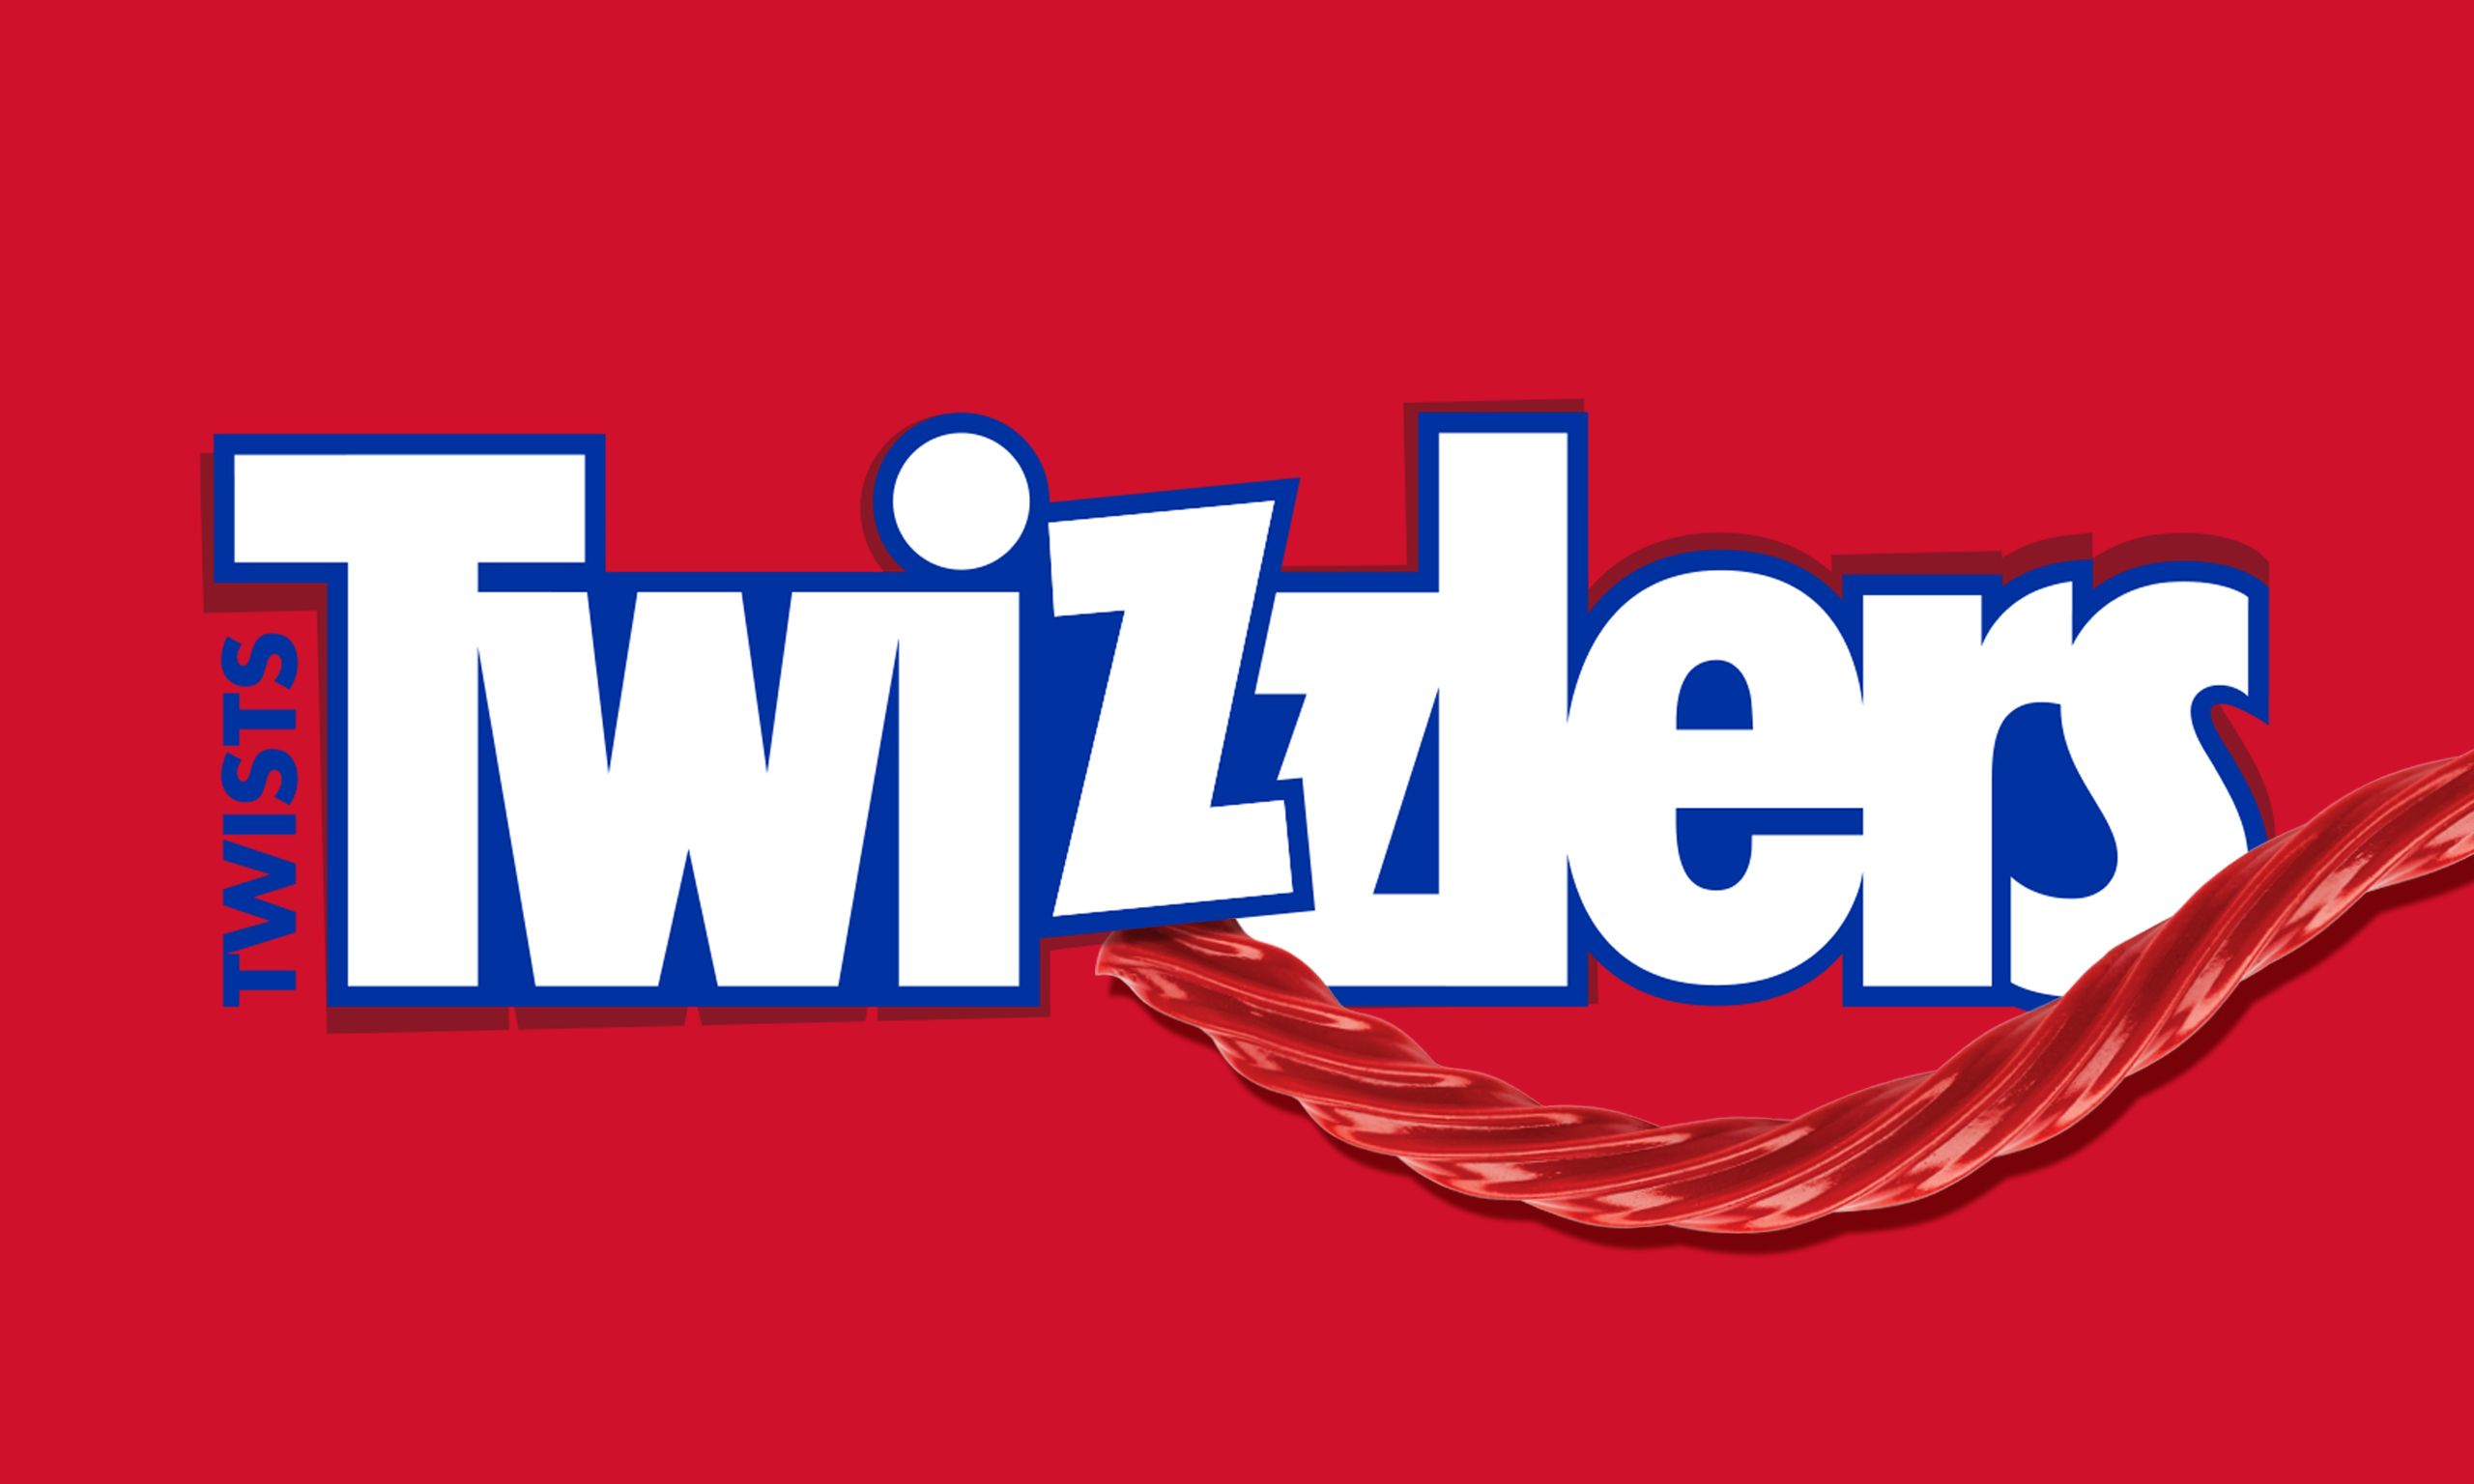 Twizzler